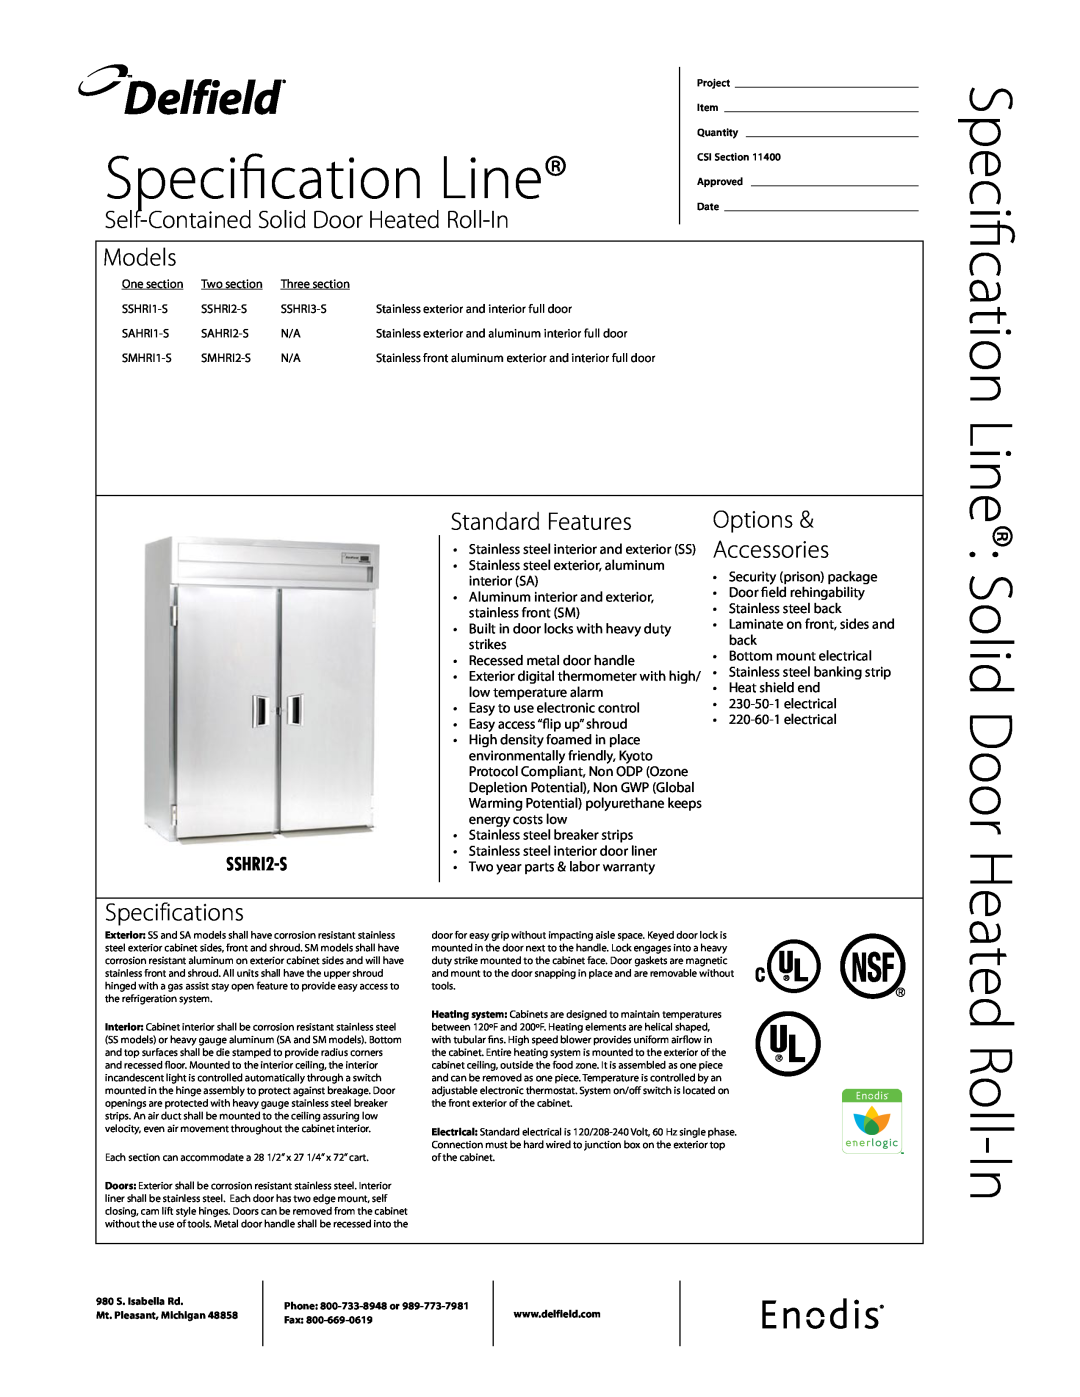 Delfield SSHRI-S specifications Delfield, Heated Roll-In, Specification Line Solid Door, Models, Standard Features 